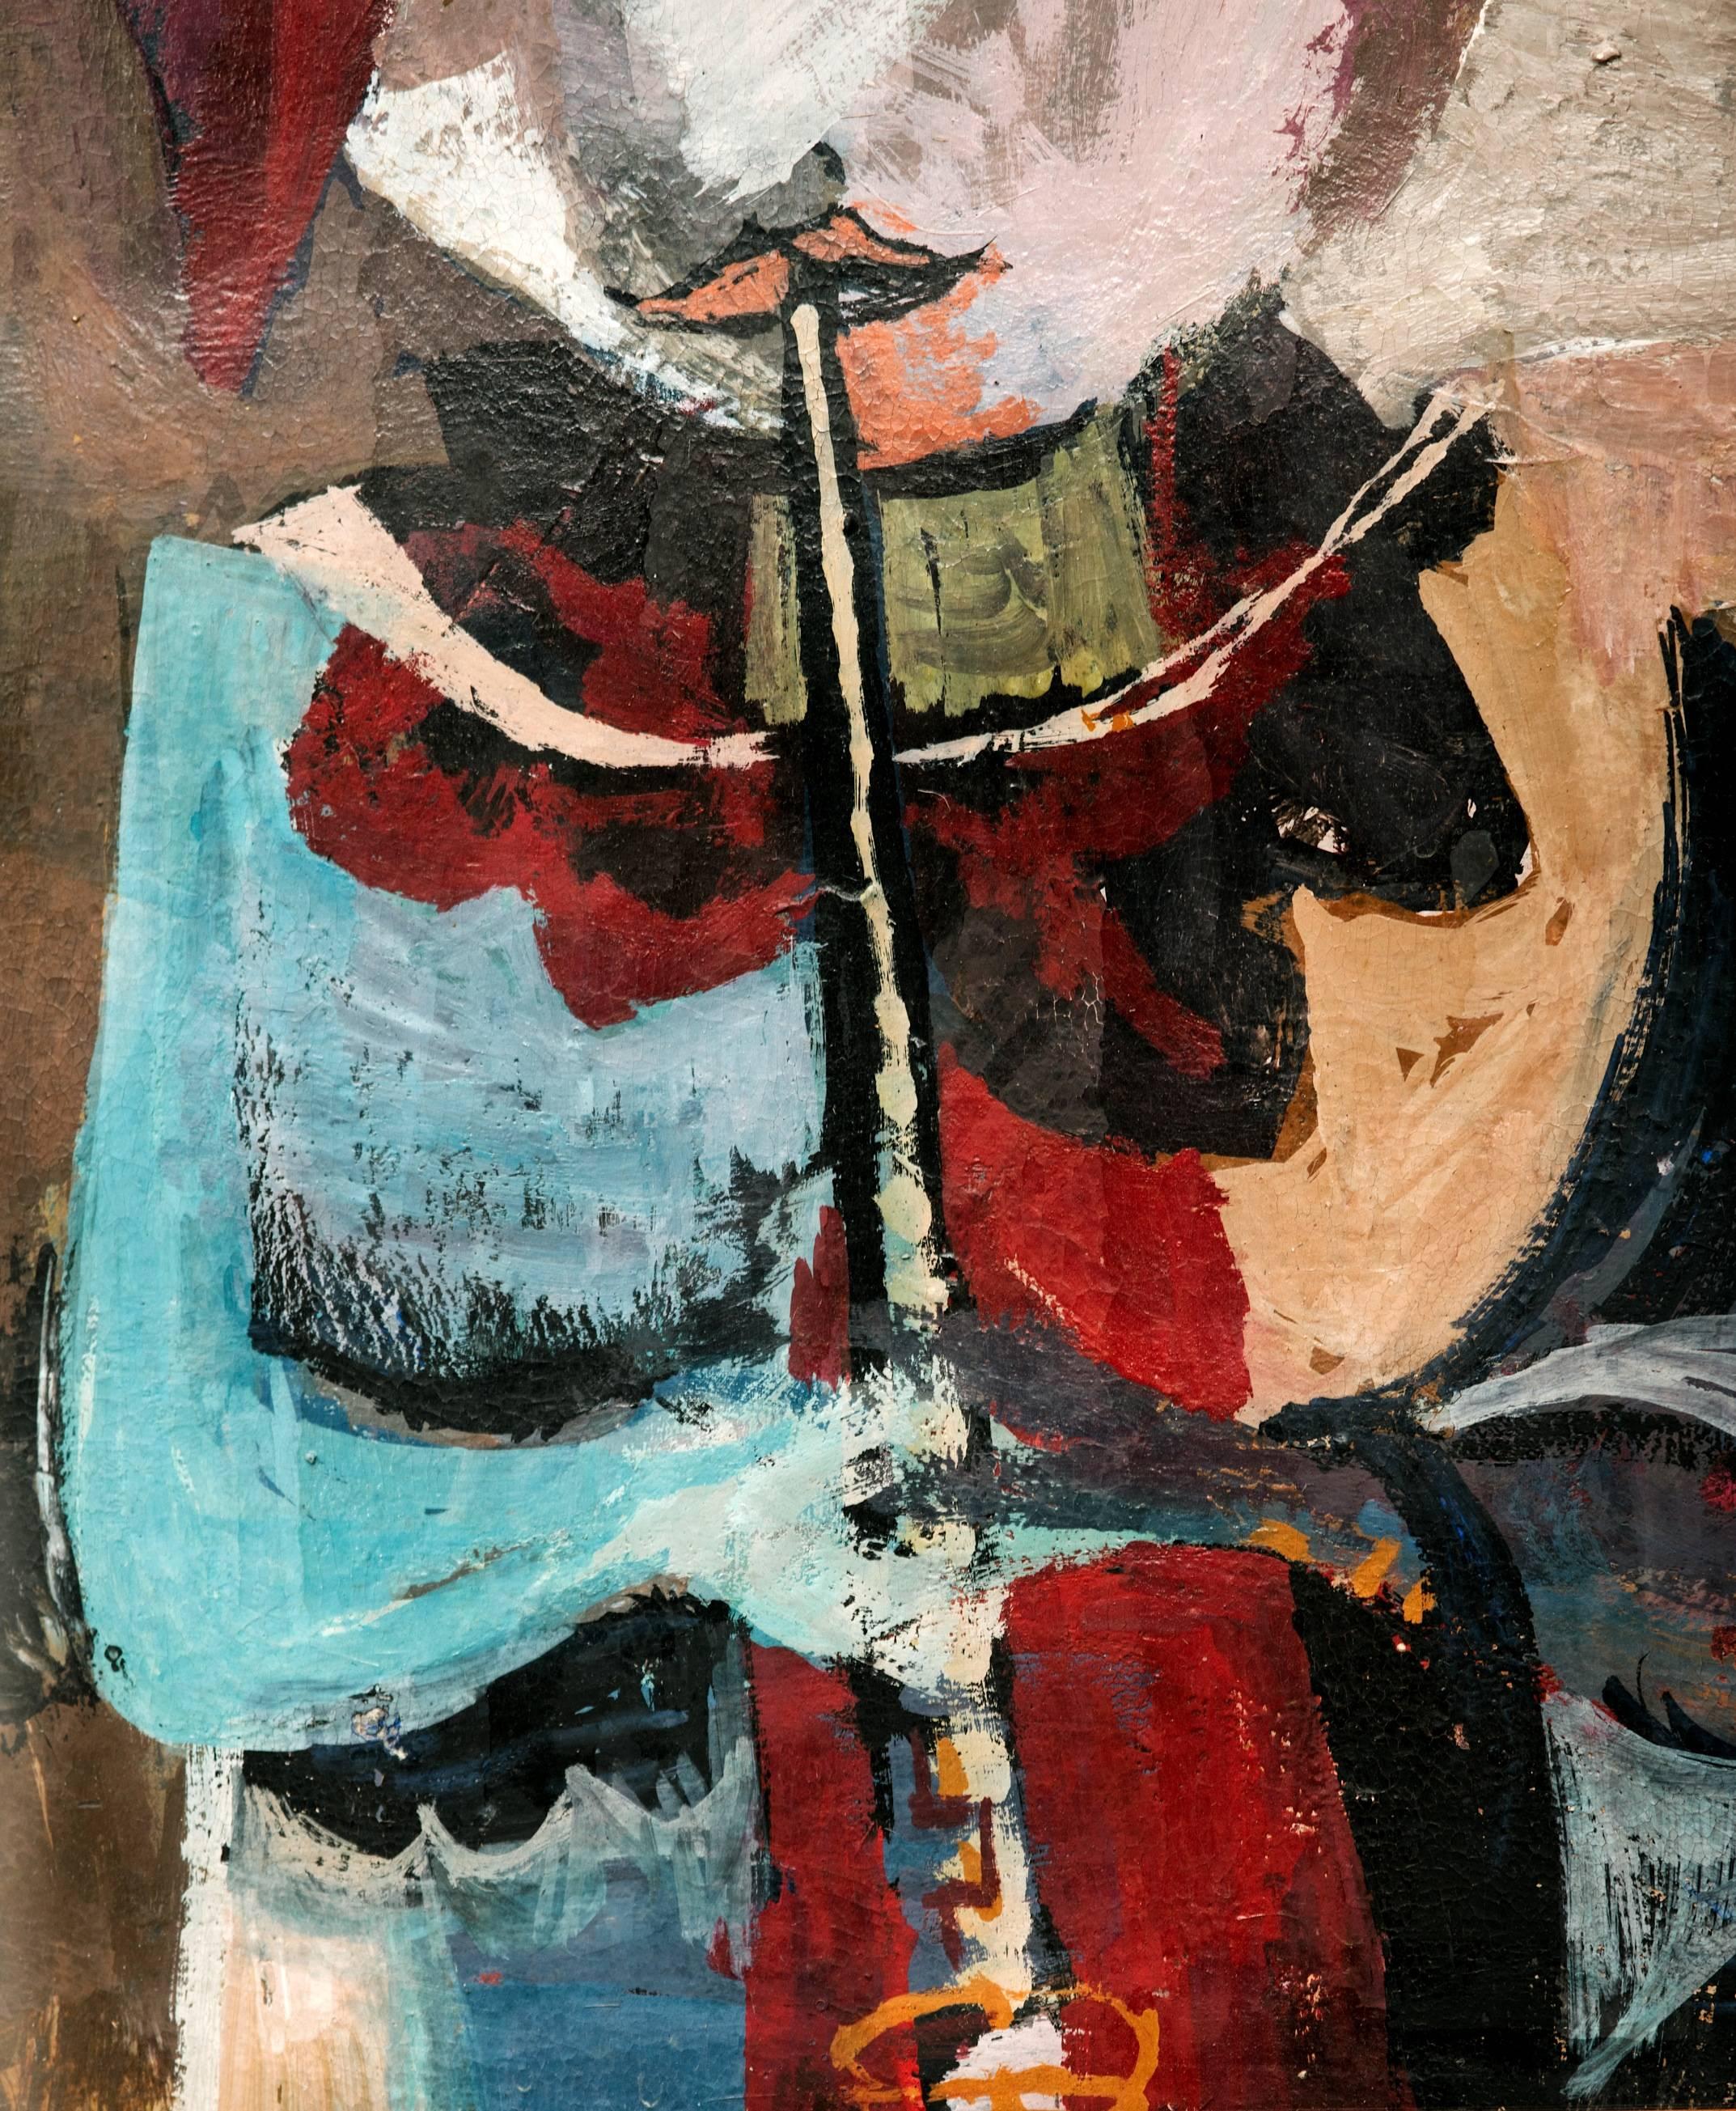 American Folk Art Painting of a Musician